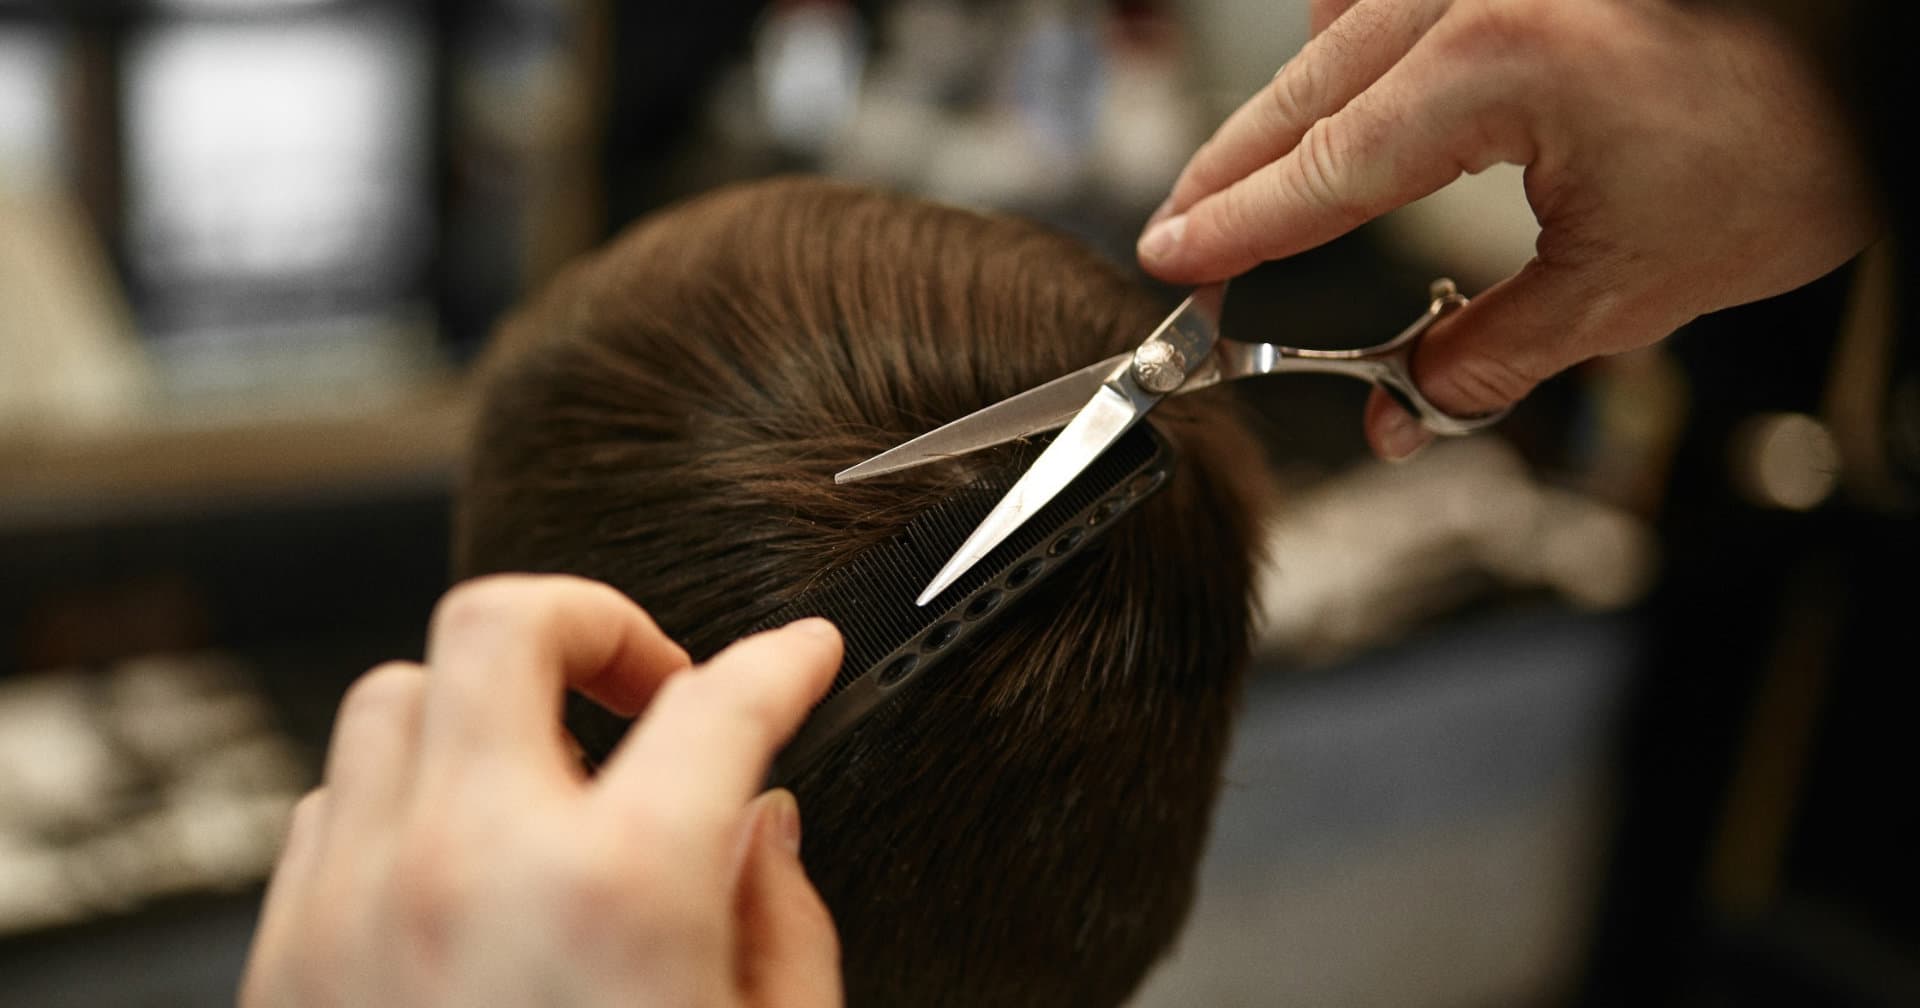 Men's hair myths